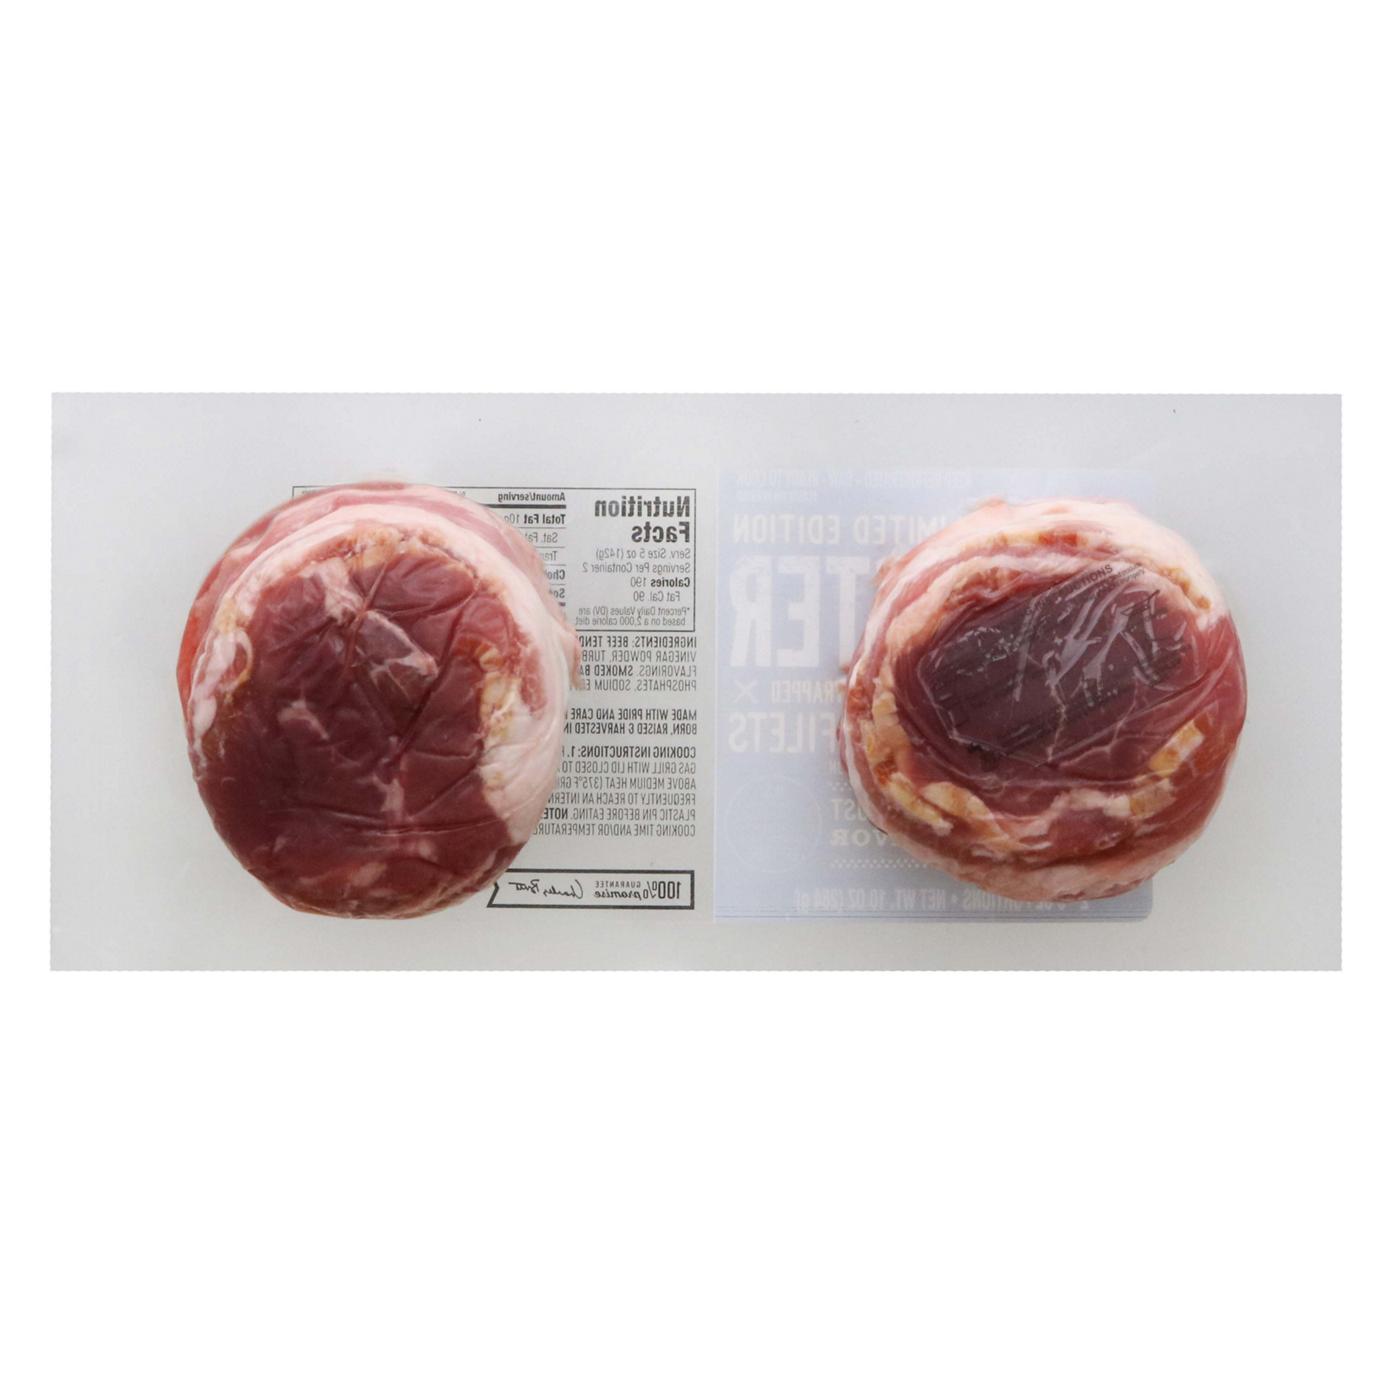 H-E-B Pitmaster Bacon Wrapped Beef Tenderloin Filets; image 2 of 2